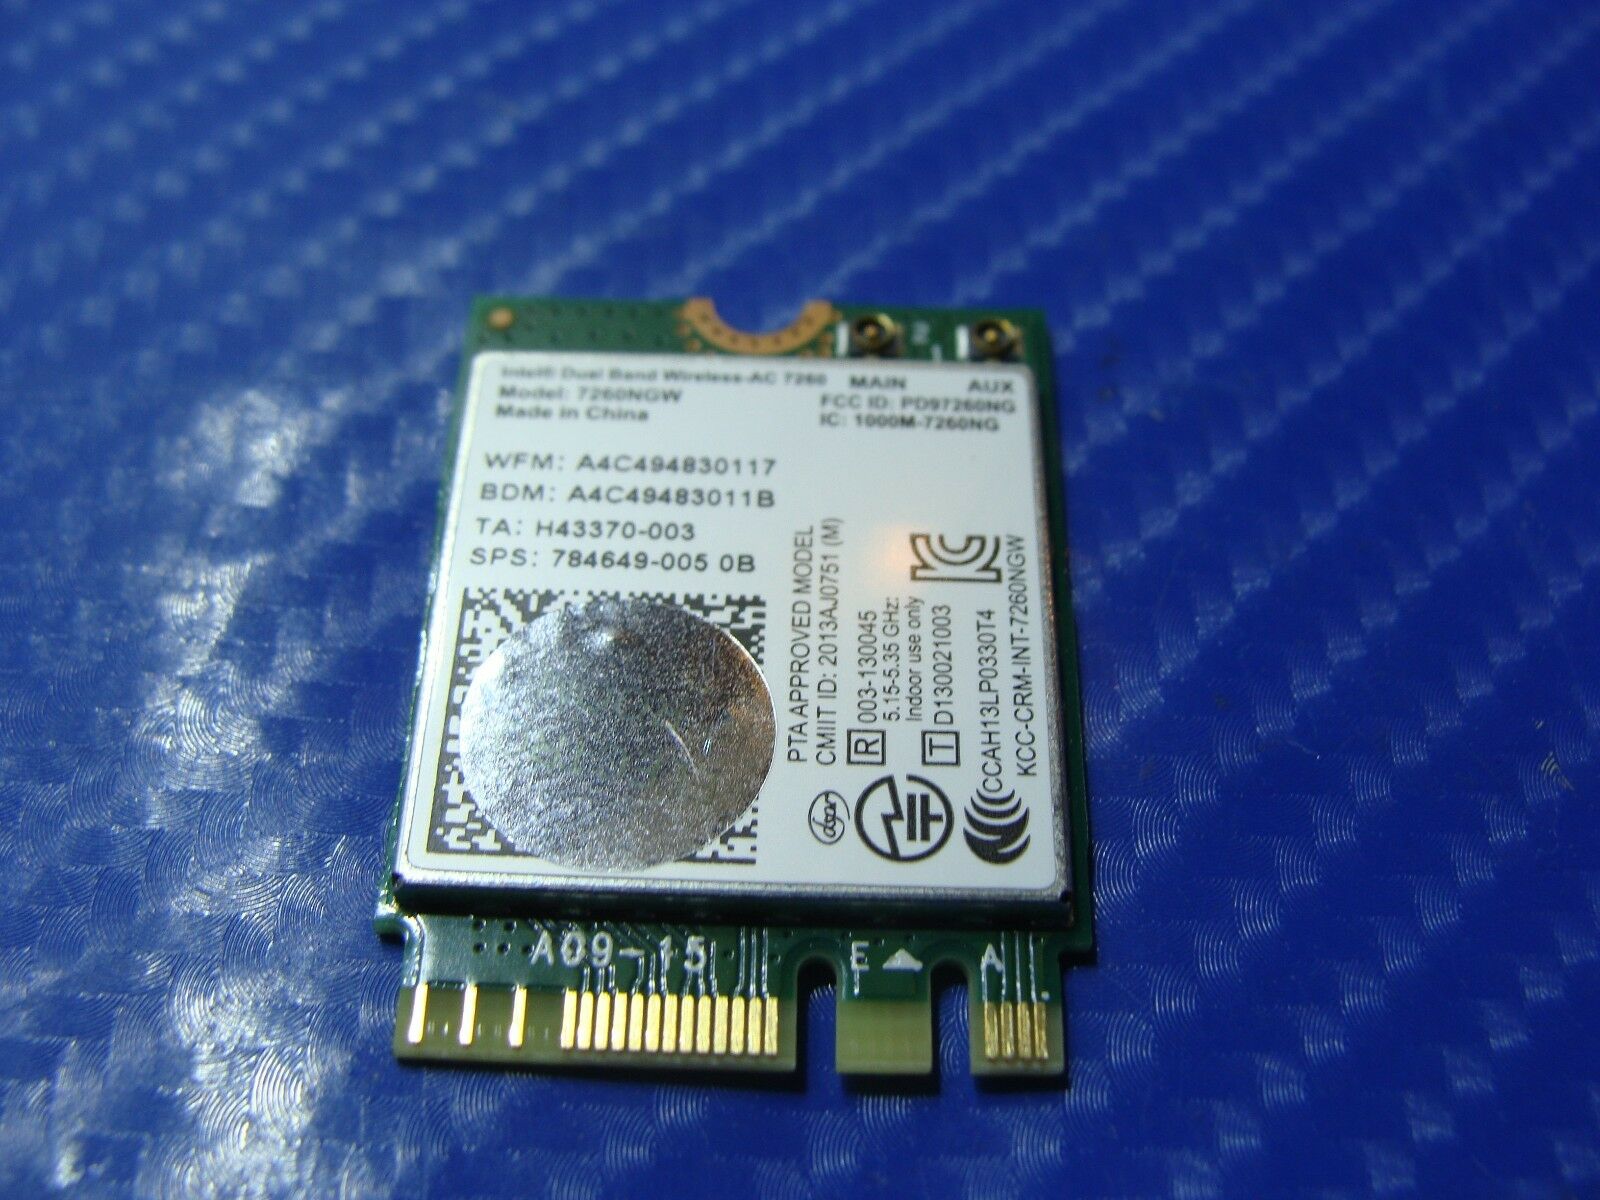 Asus Chromebook C300MA-DH02-LB 13.3